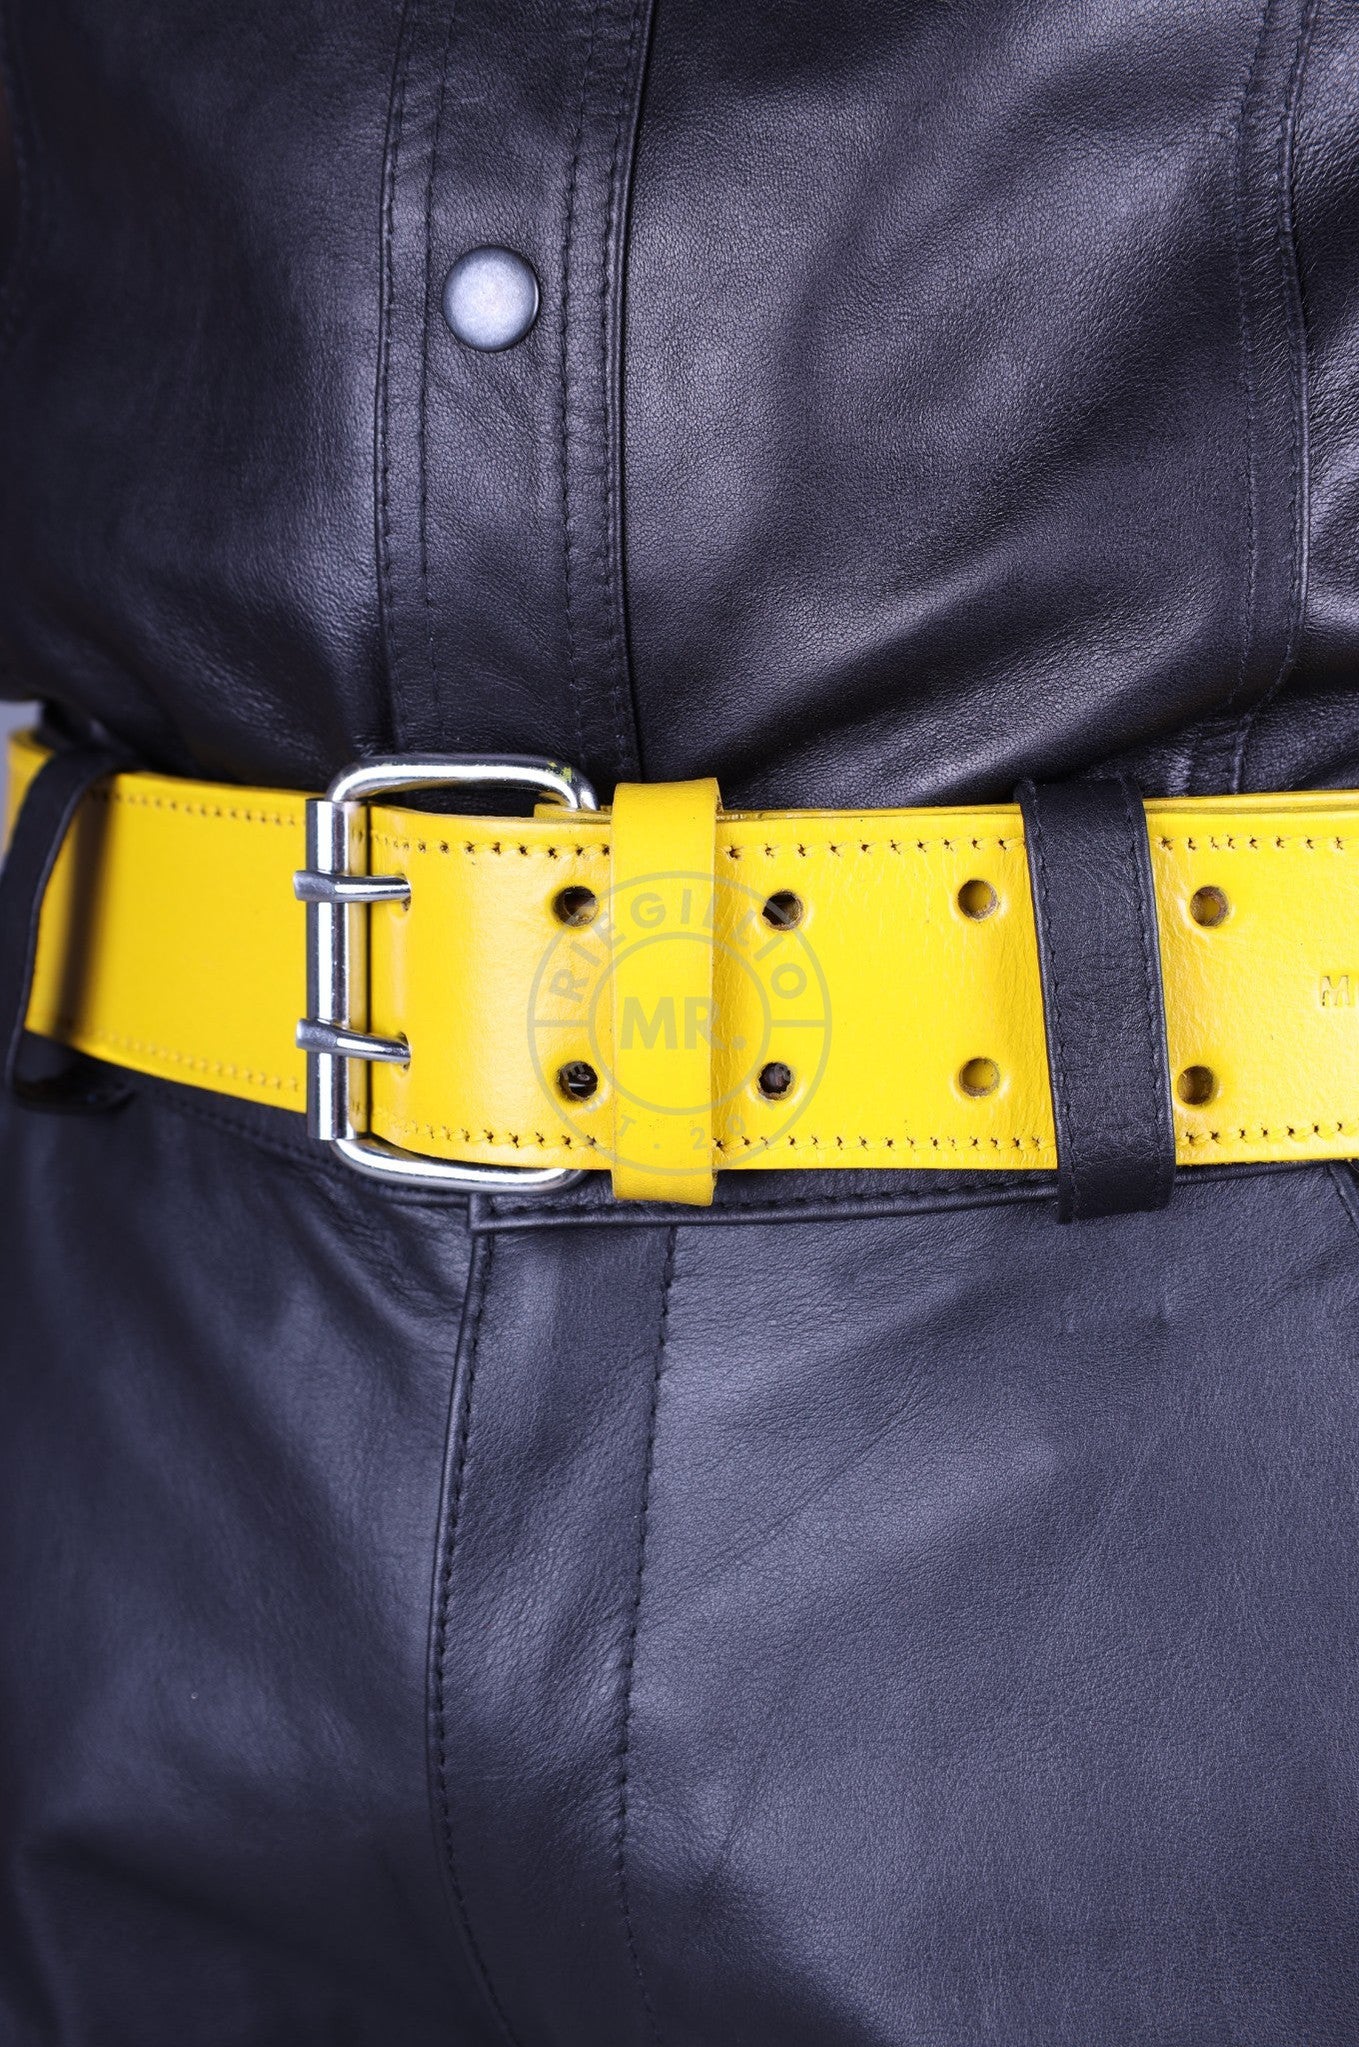 Yellow Leather Belt at MR. Riegillio